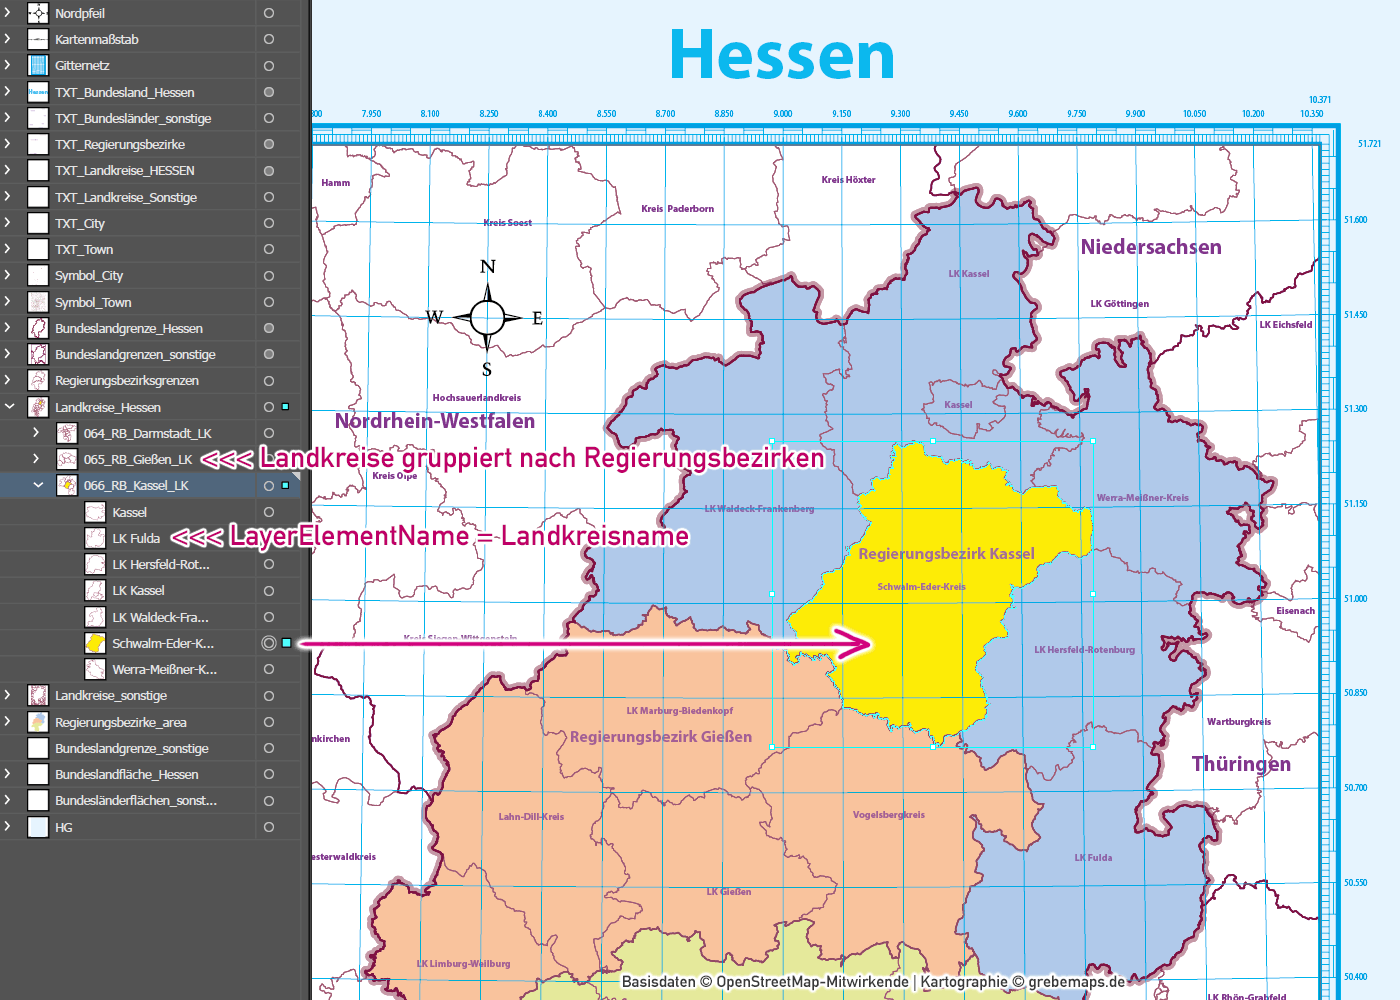 Hessen Vektorkarte Regierungsbezirke Landkreise, Karte Hessen Landkreise, Karte Hessen Regierungsbezirke, Vektorkarte Hessen Landkreise, Landkarte Hessen Landkreise, Vektorgrafik Hessen Landkreise, AI, download, editierbar